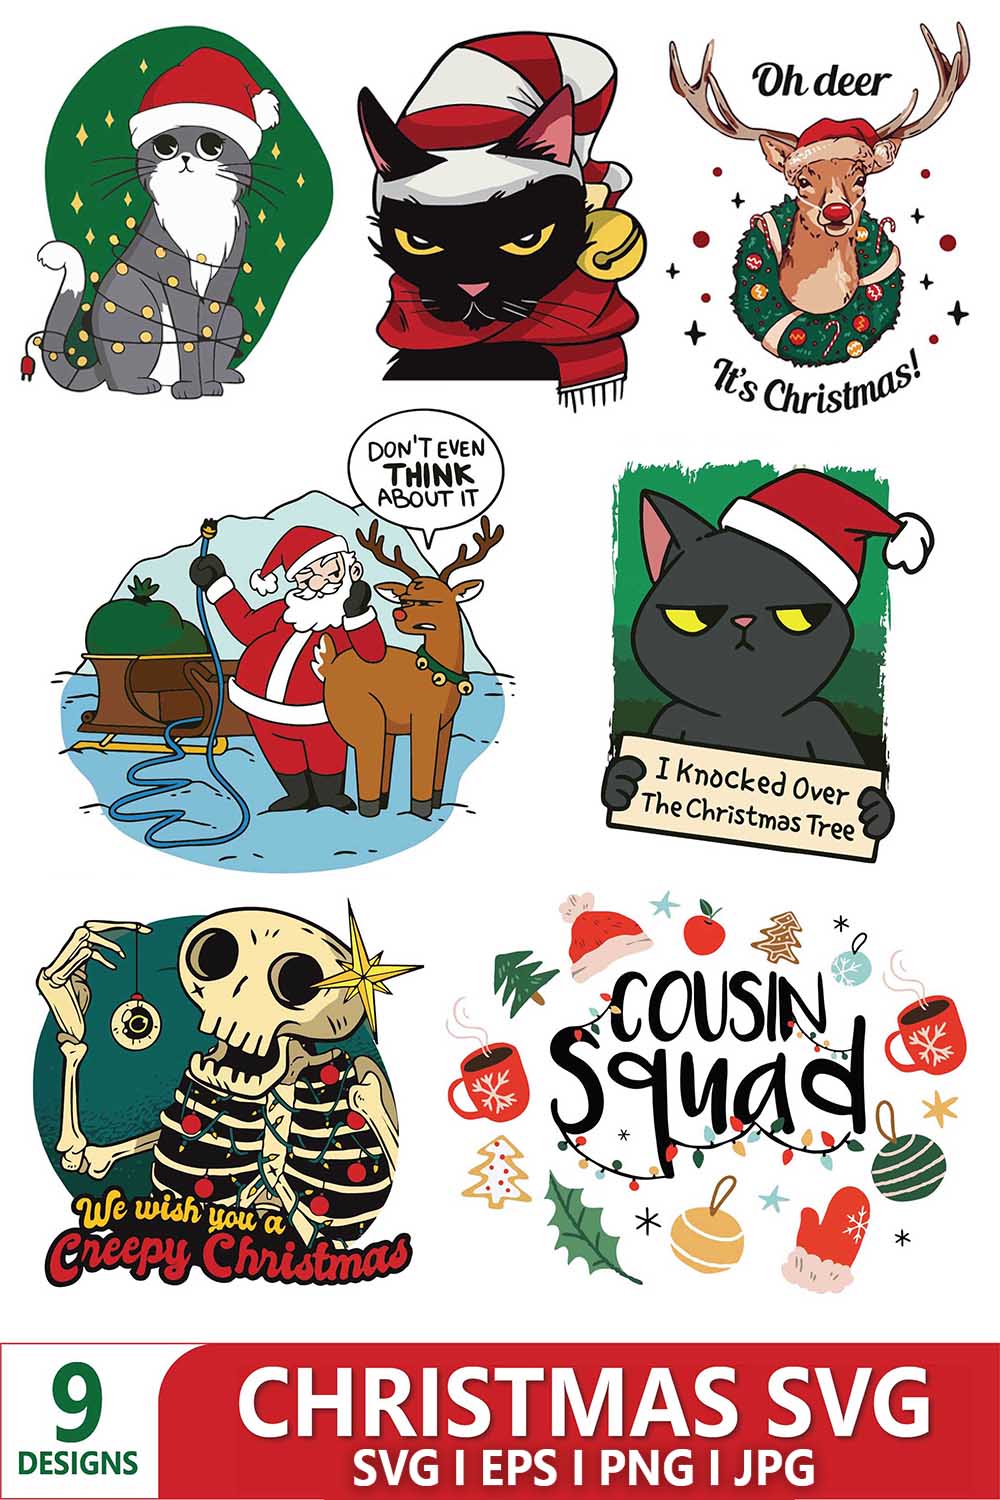 Christmas Cricut Designs SVG Pinterest image.